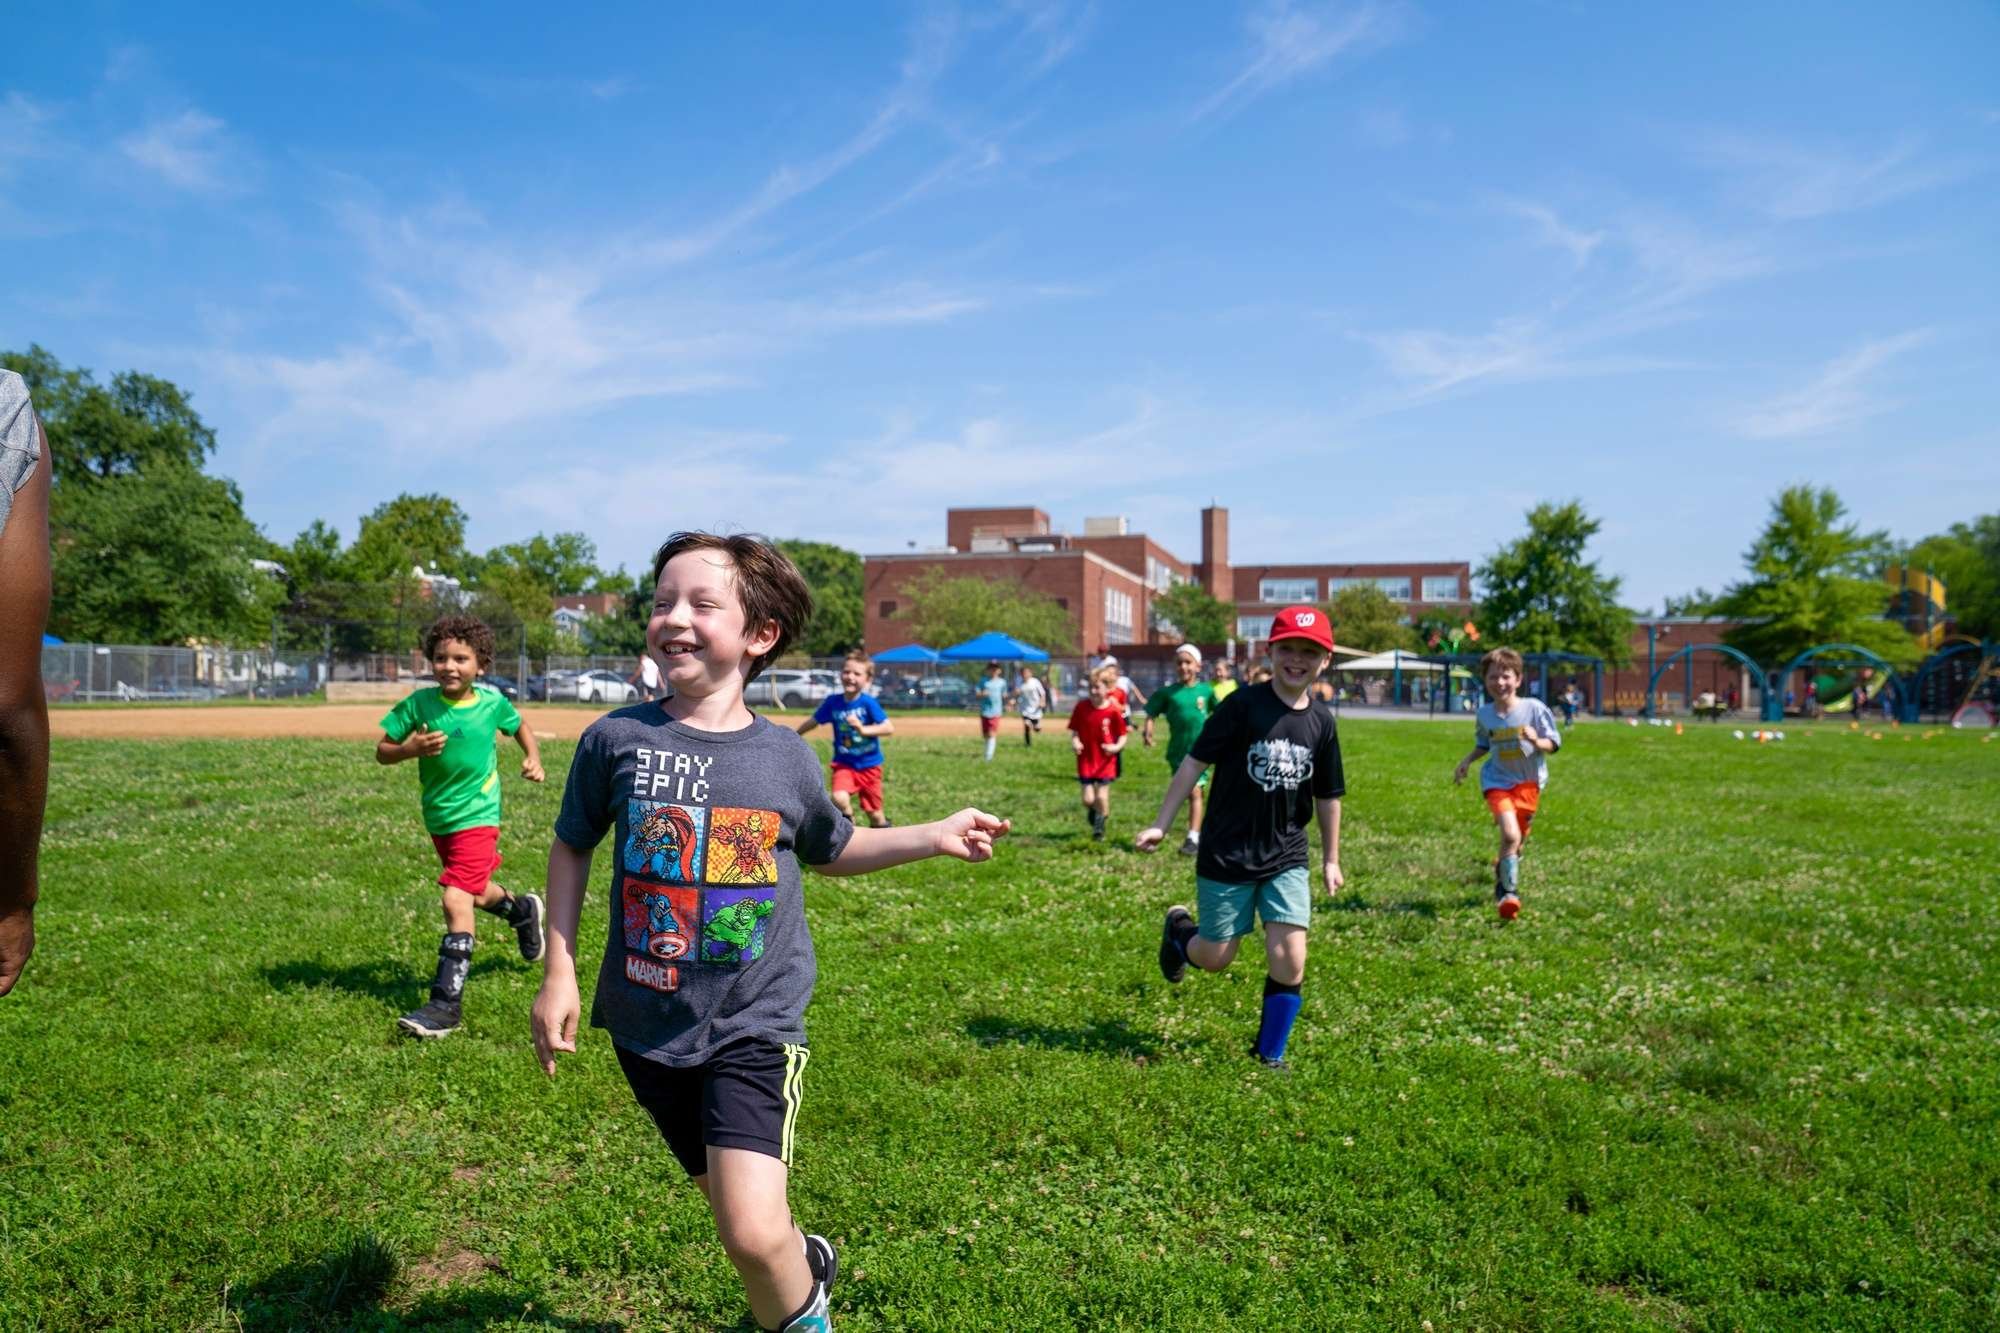 Dc-way-soccer-club-for-kids-in-washington-dc-summer-camp-at-tyler-elementary-school- 0262.jpg